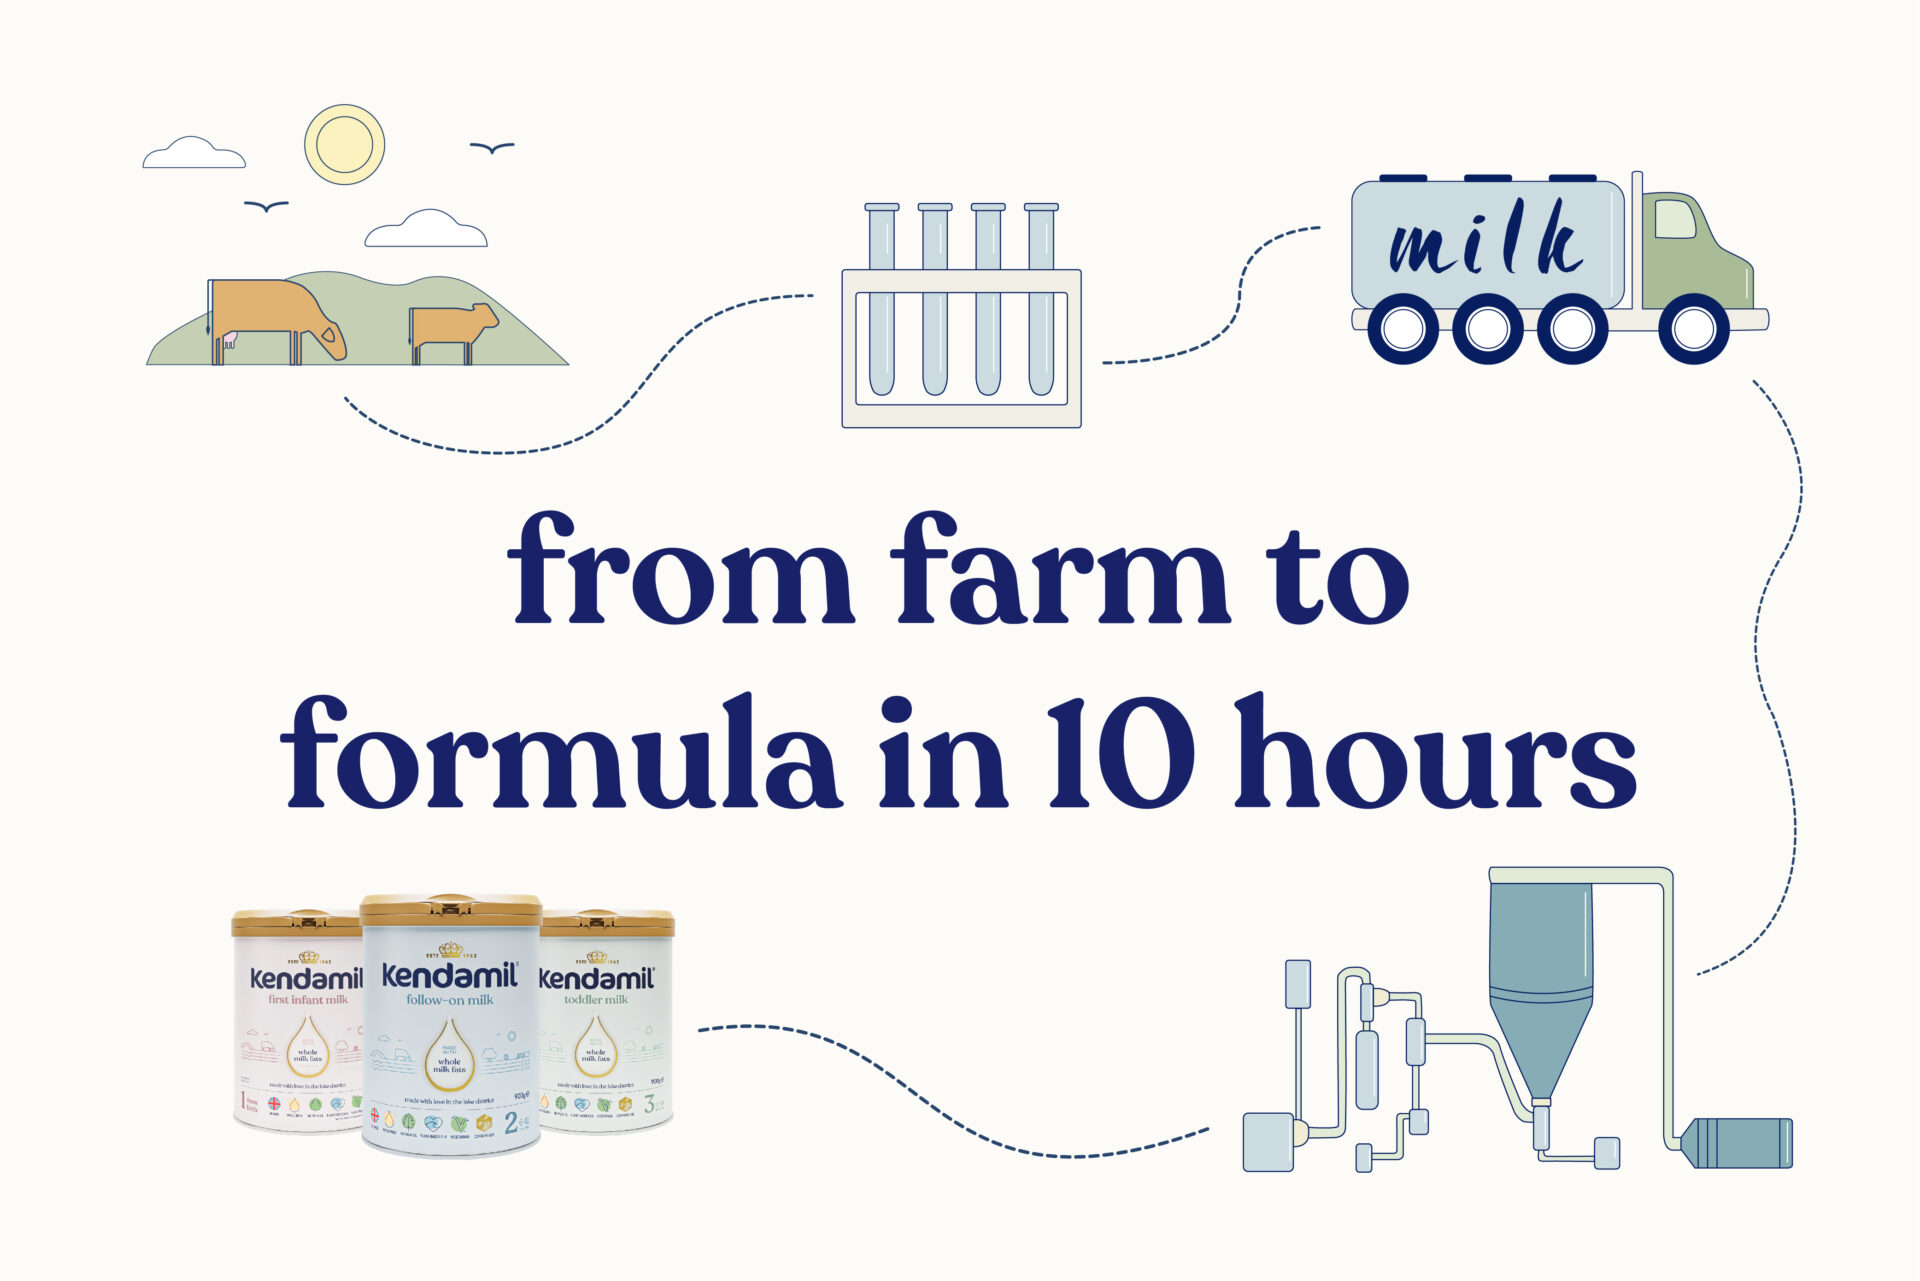 Our unique recipe: From farm to formula